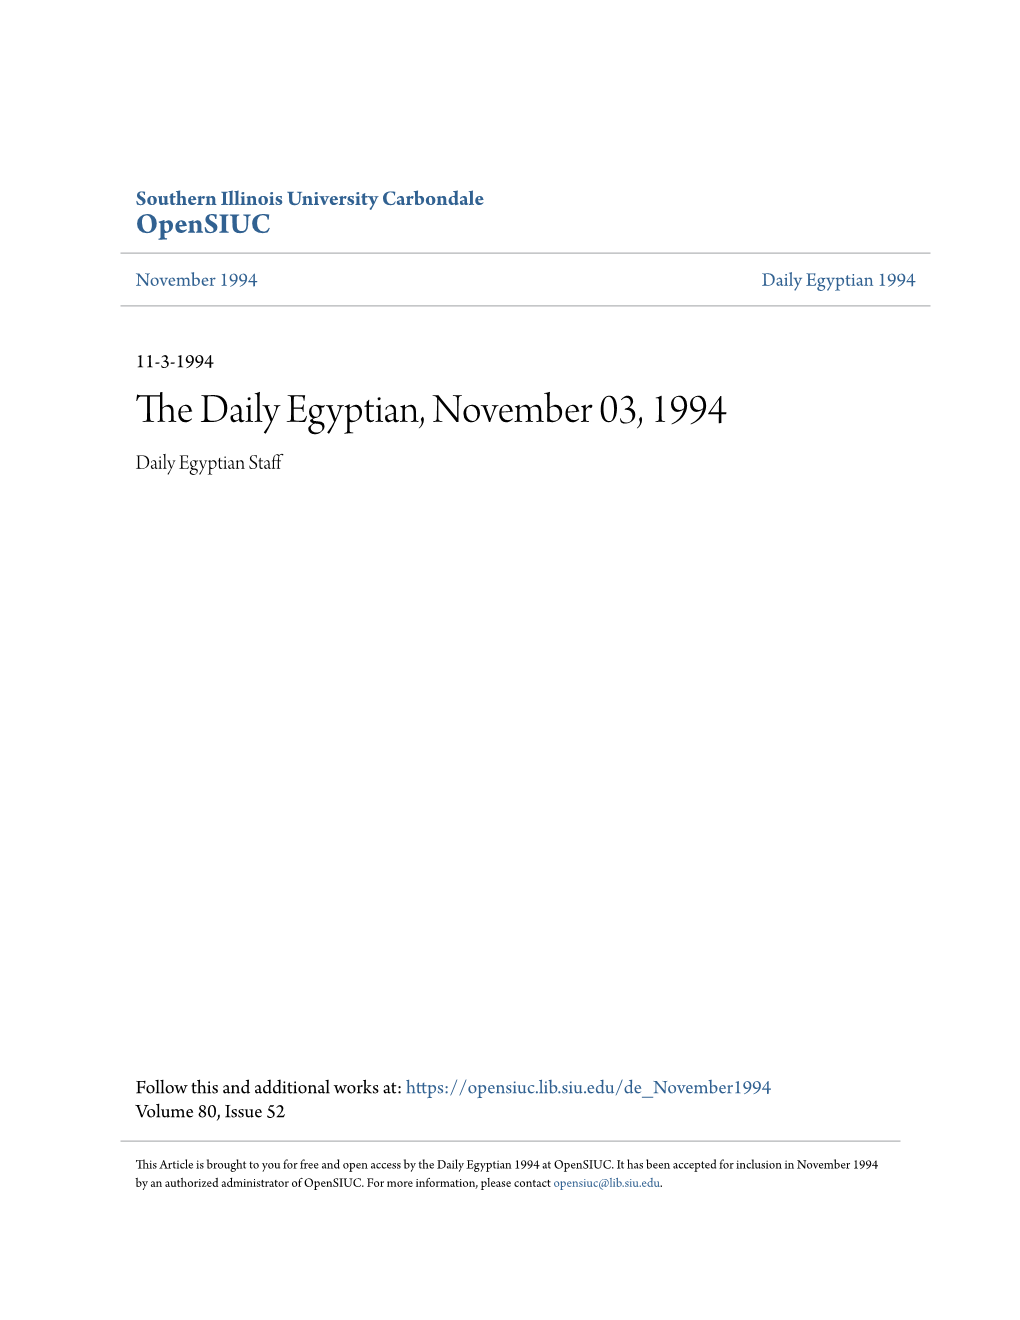 The Daily Egyptian, November 03, 1994